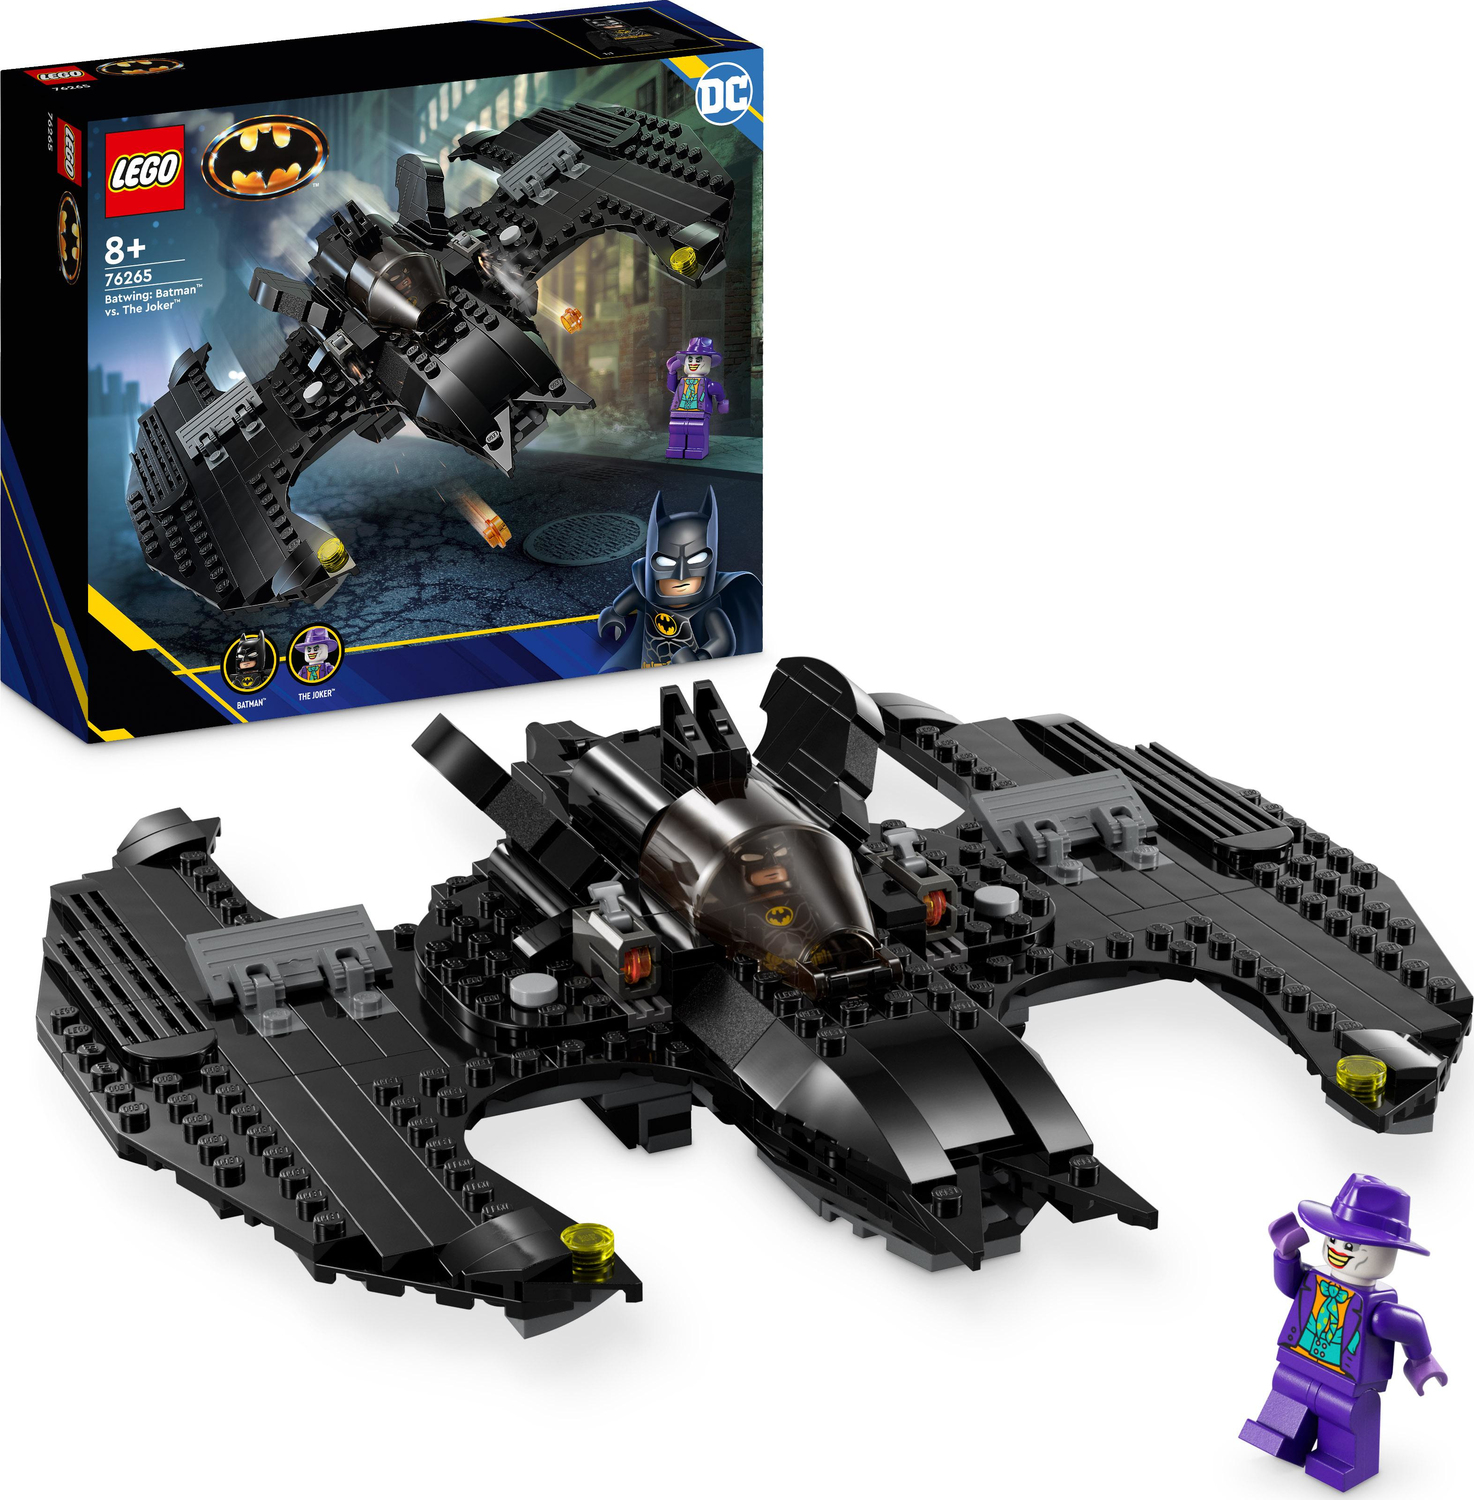 LEGO DC Batwing Batman vs. The Joker Toy set